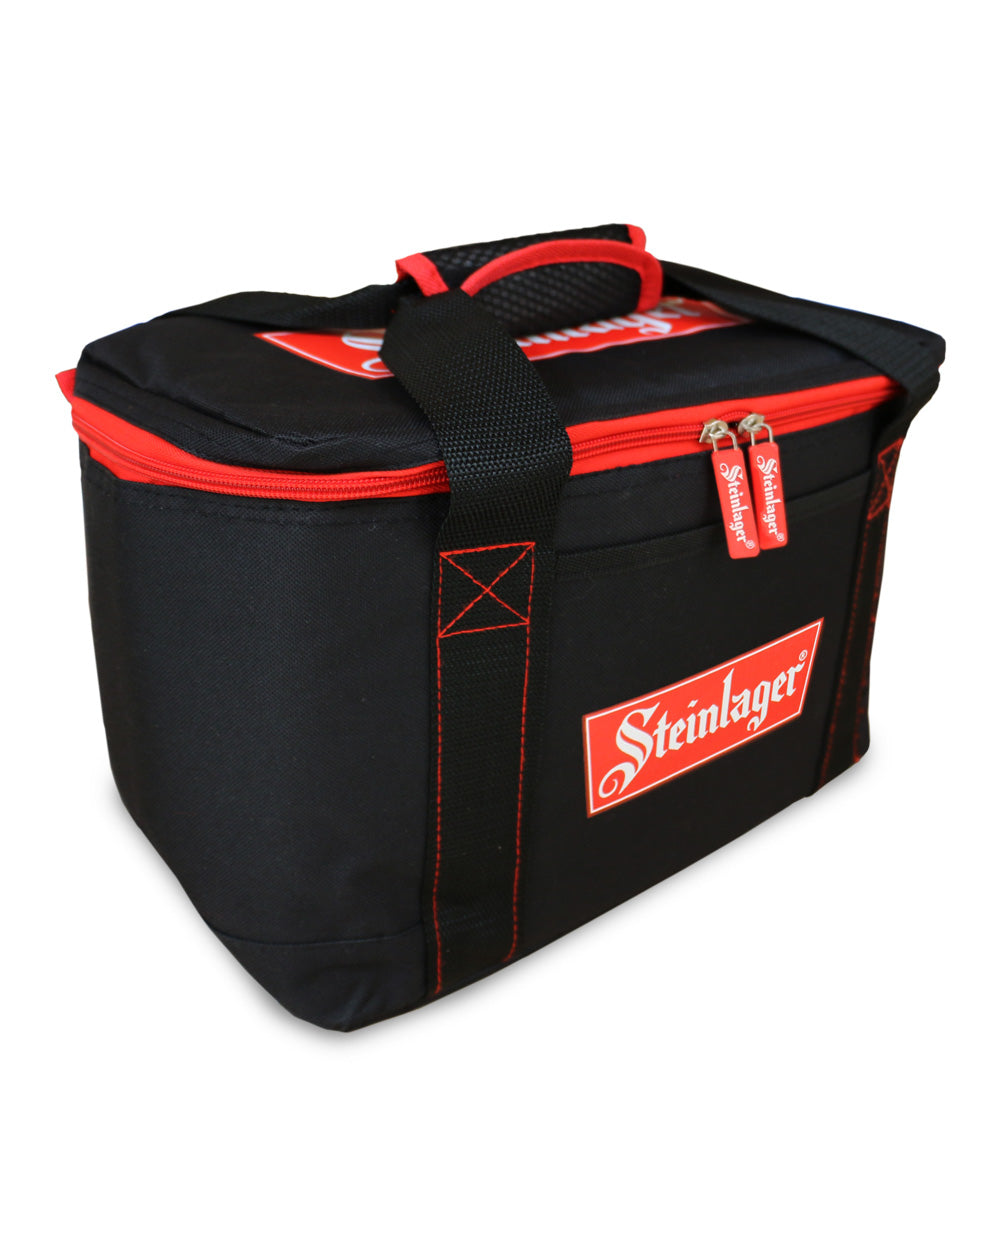 Steinlager 15pack Cooler Bag -  Beer Gear Apparel & Merchandise - Speights - Lion Red - VB - Tokyo Dy merch